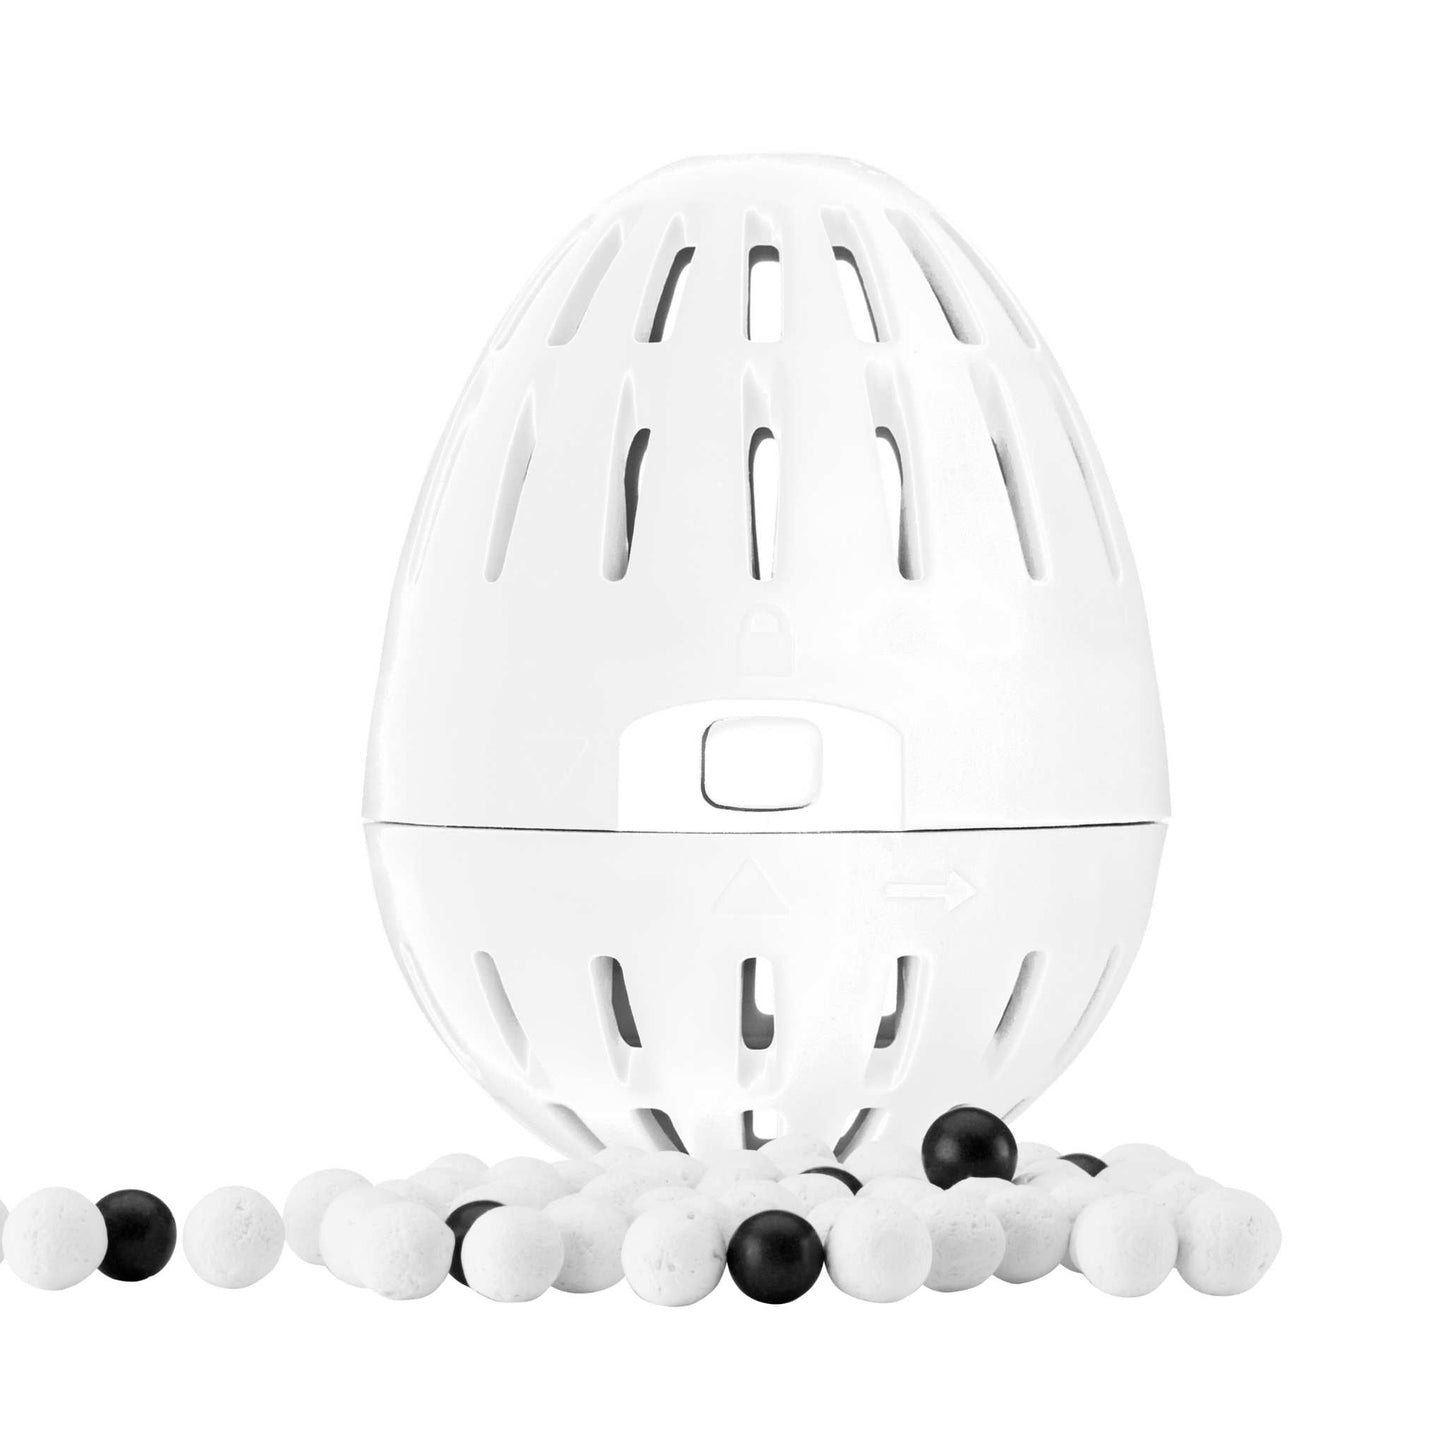 Eco Egg Laundry Eco Egg Laundry Refills for Whites + Lights - Spring Blossom - 50 washes